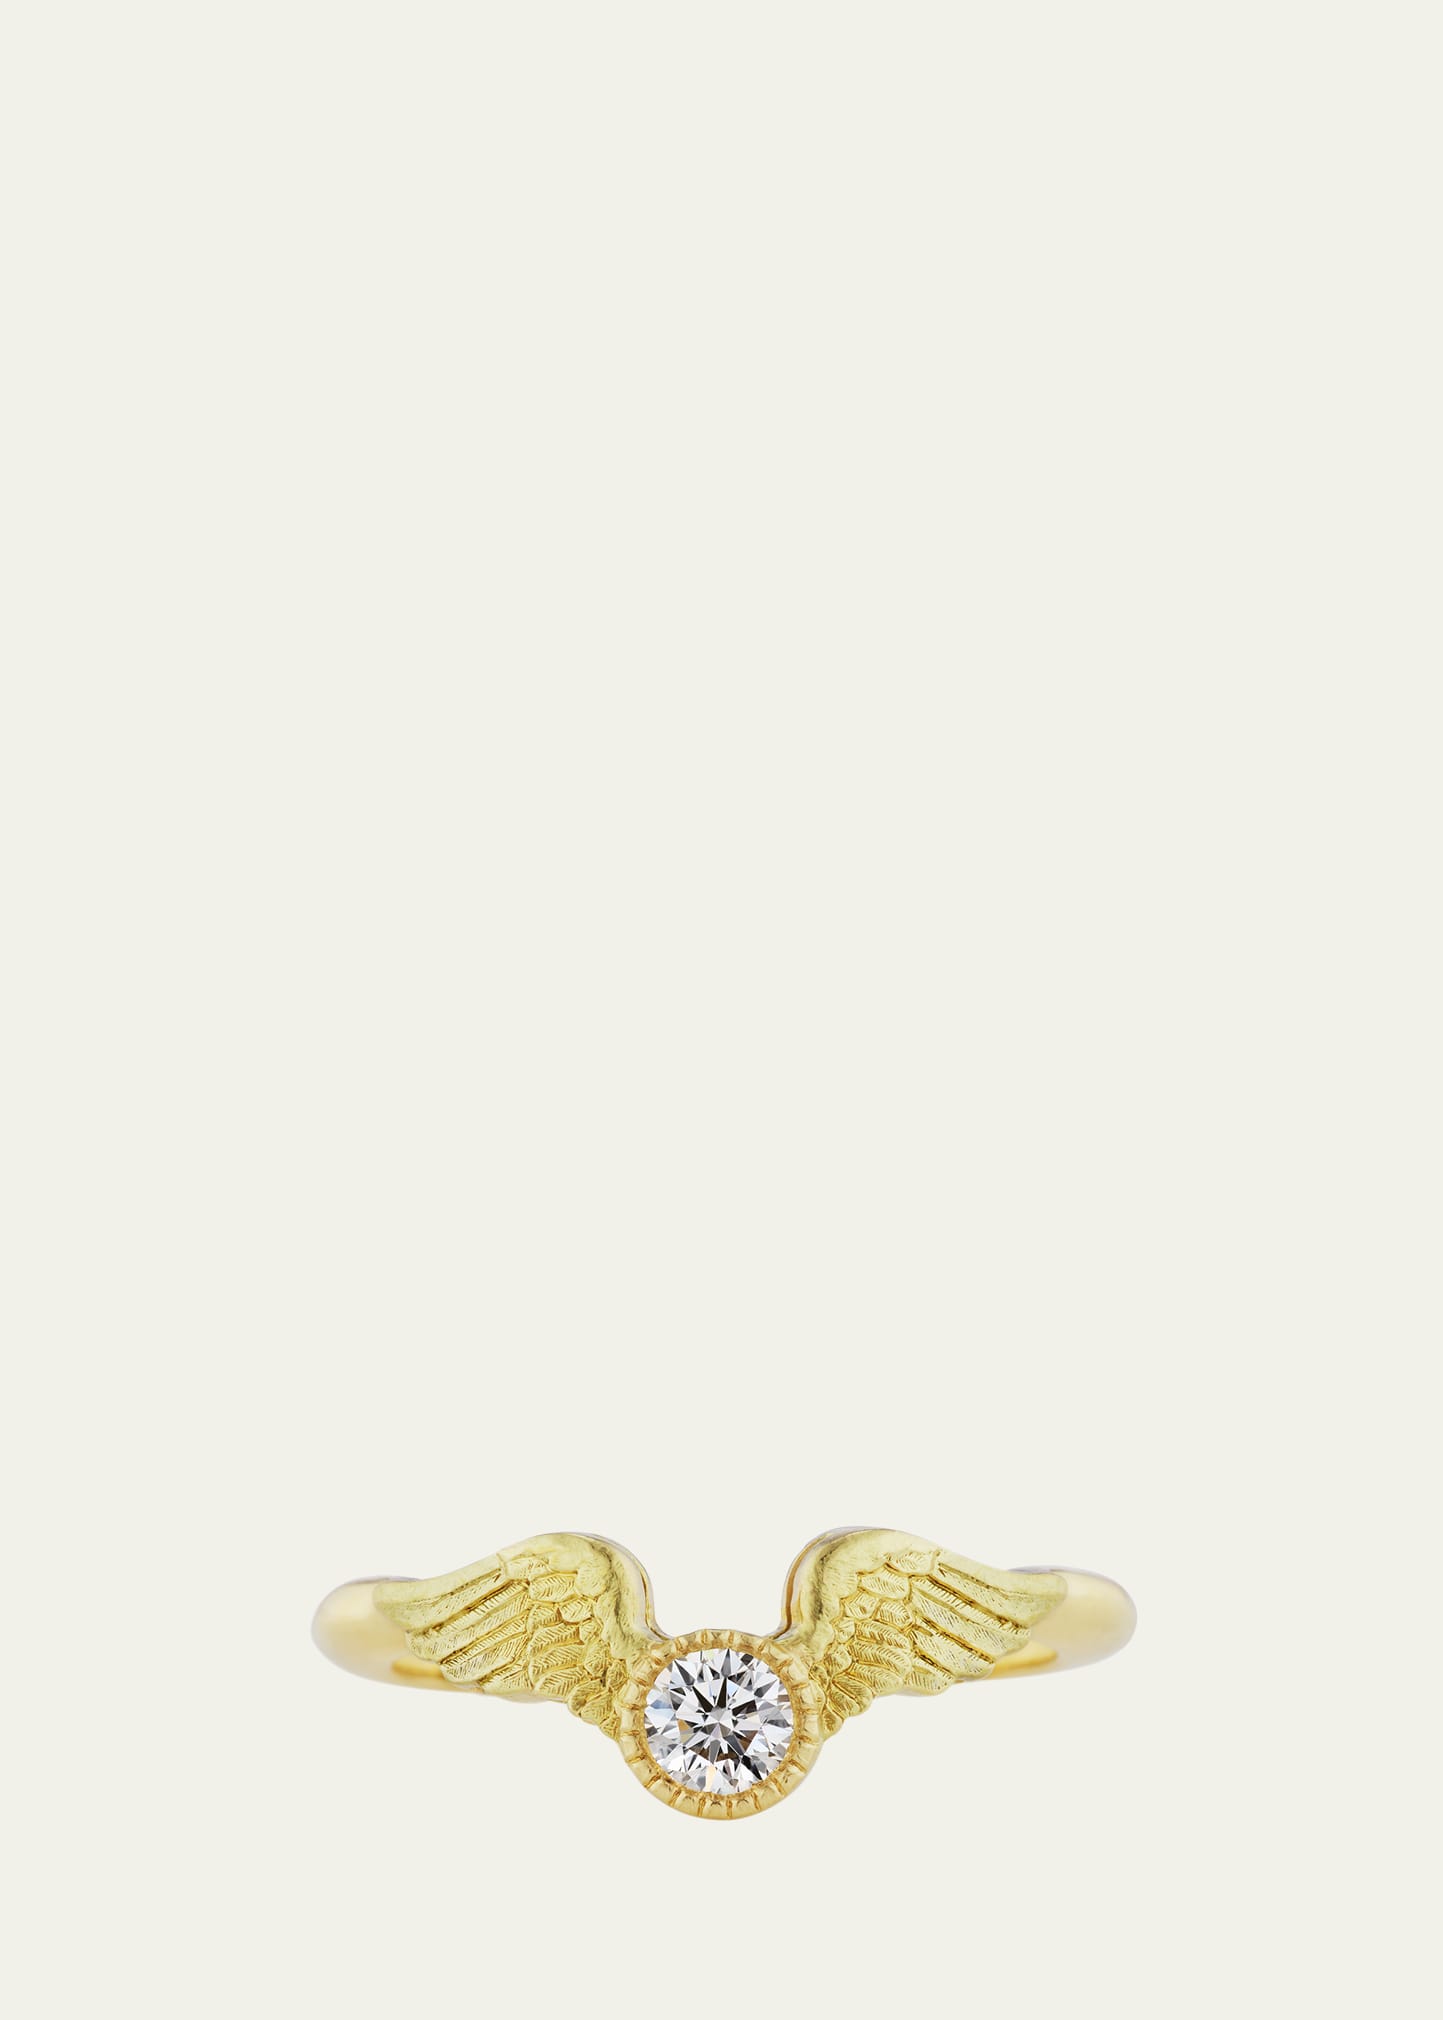 18K Yellow Gold Flying Diamond Engagement Ring, Size 6